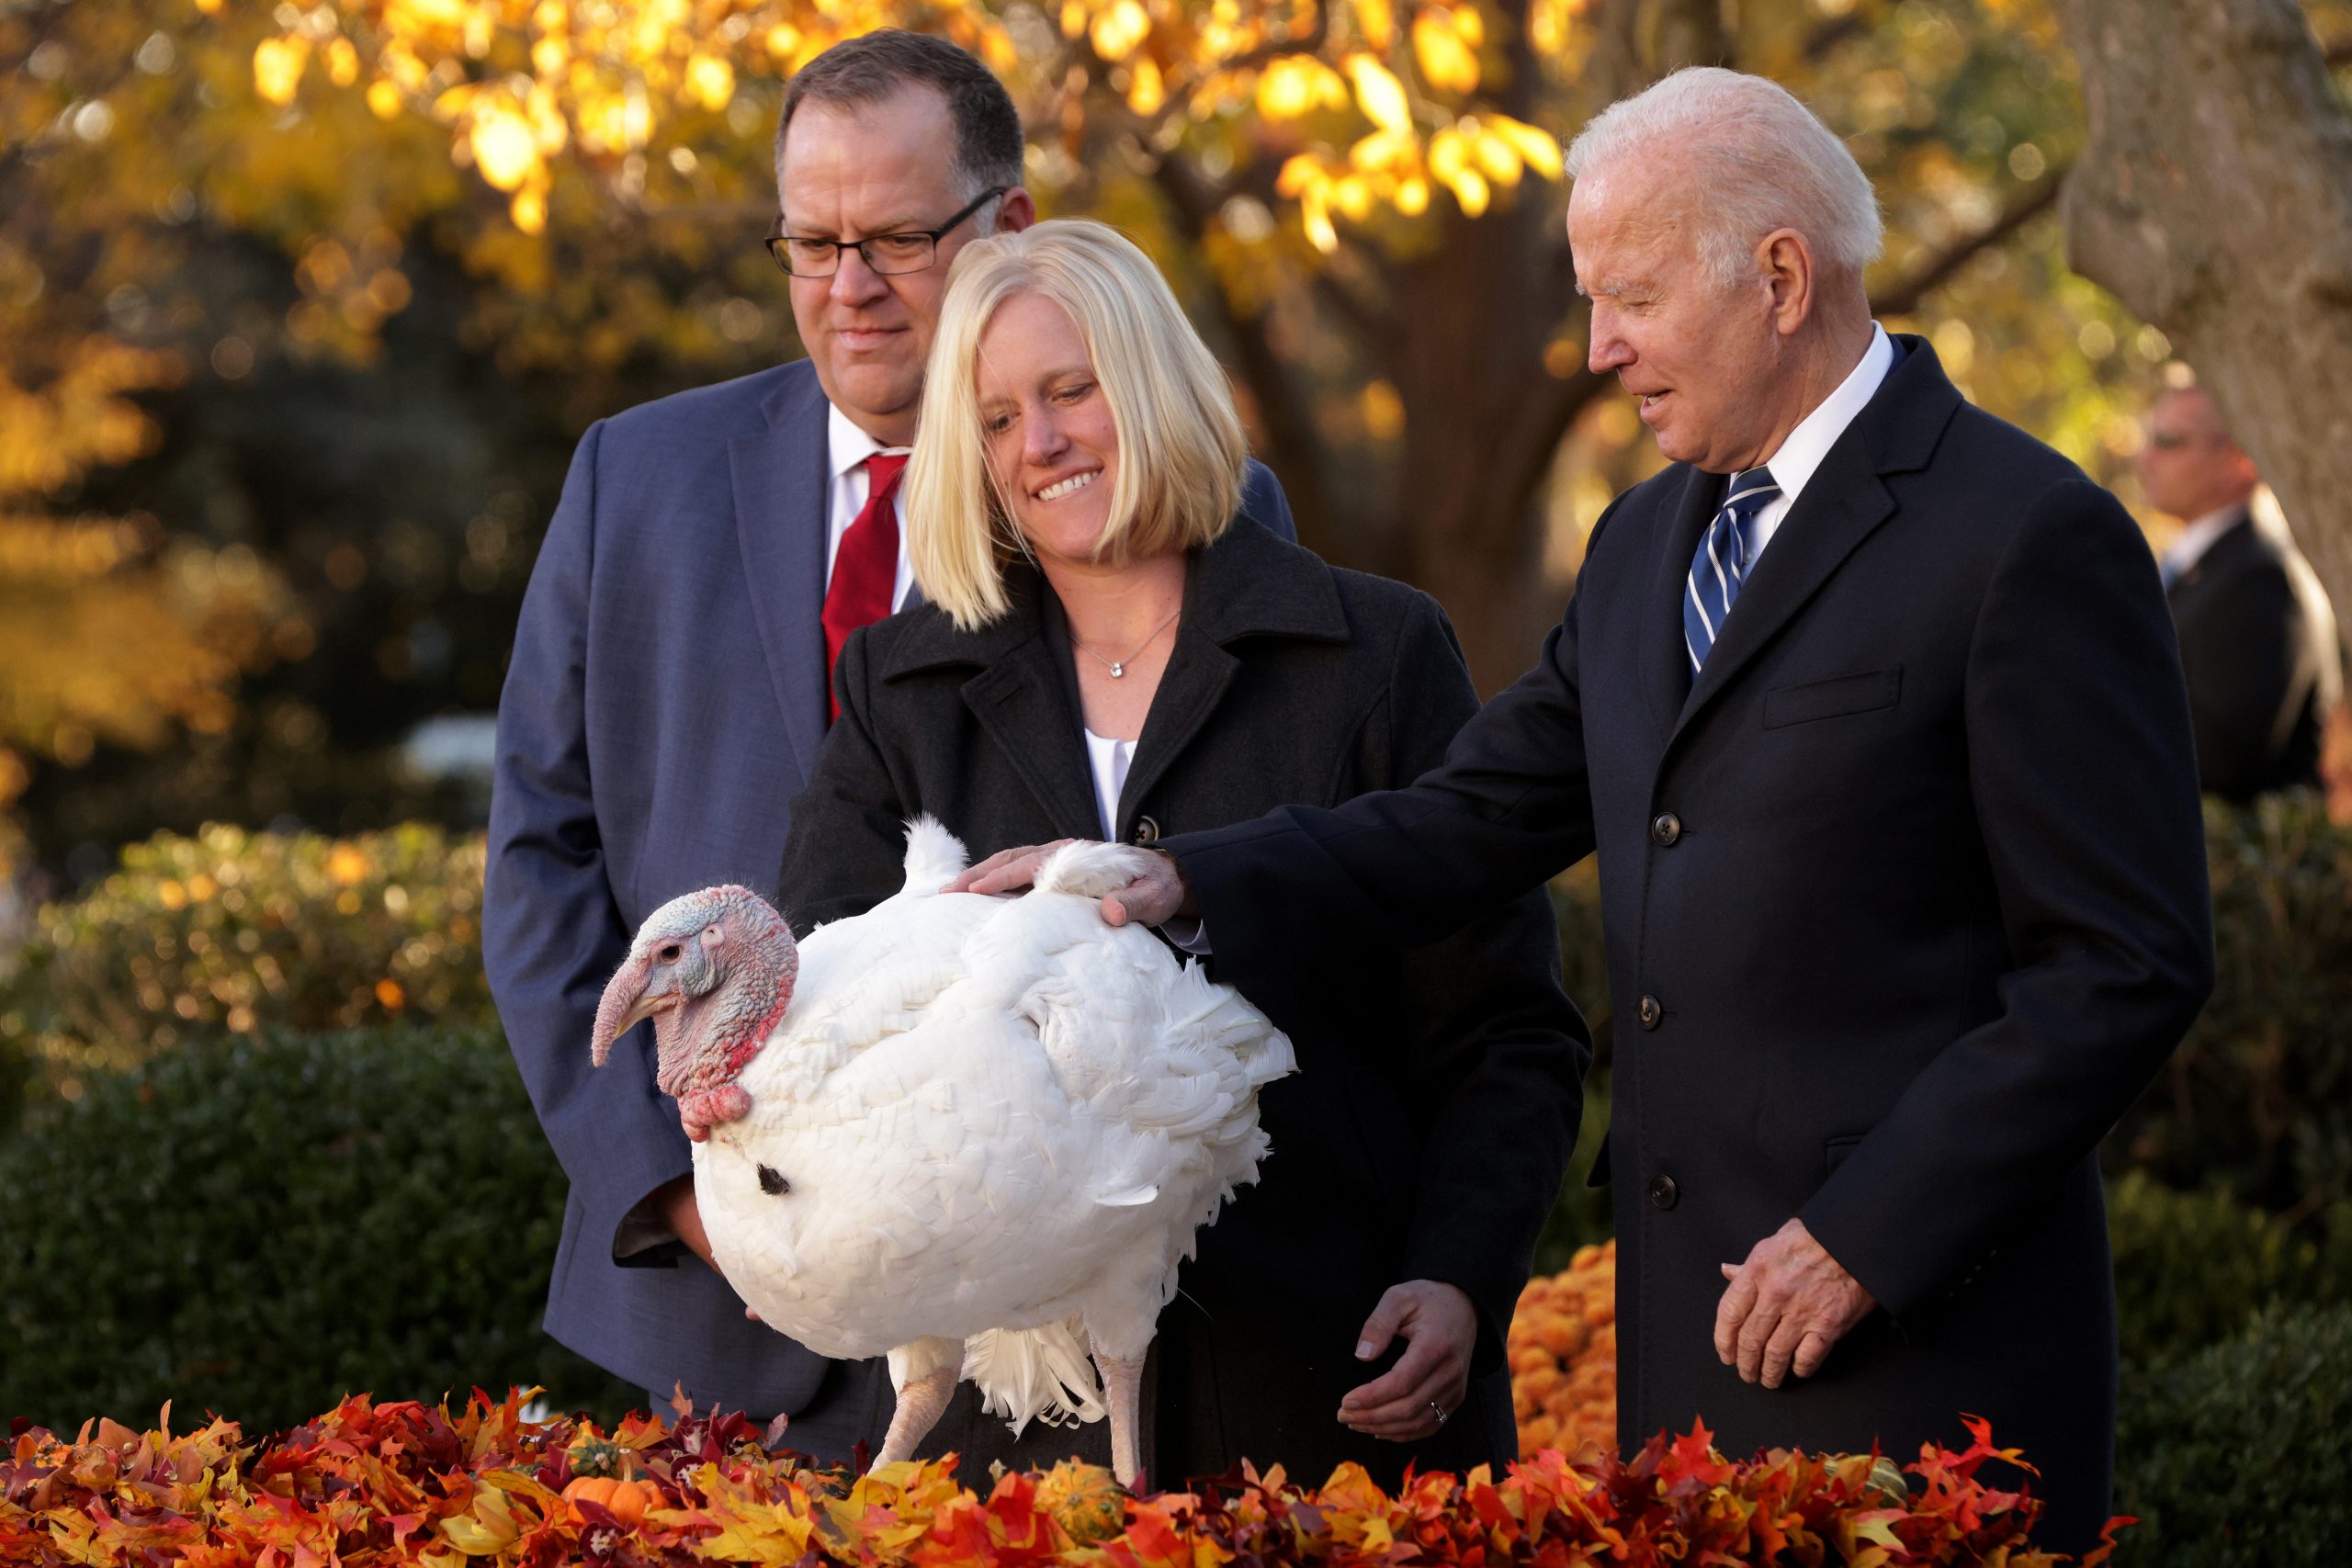 Biden petting a turkey